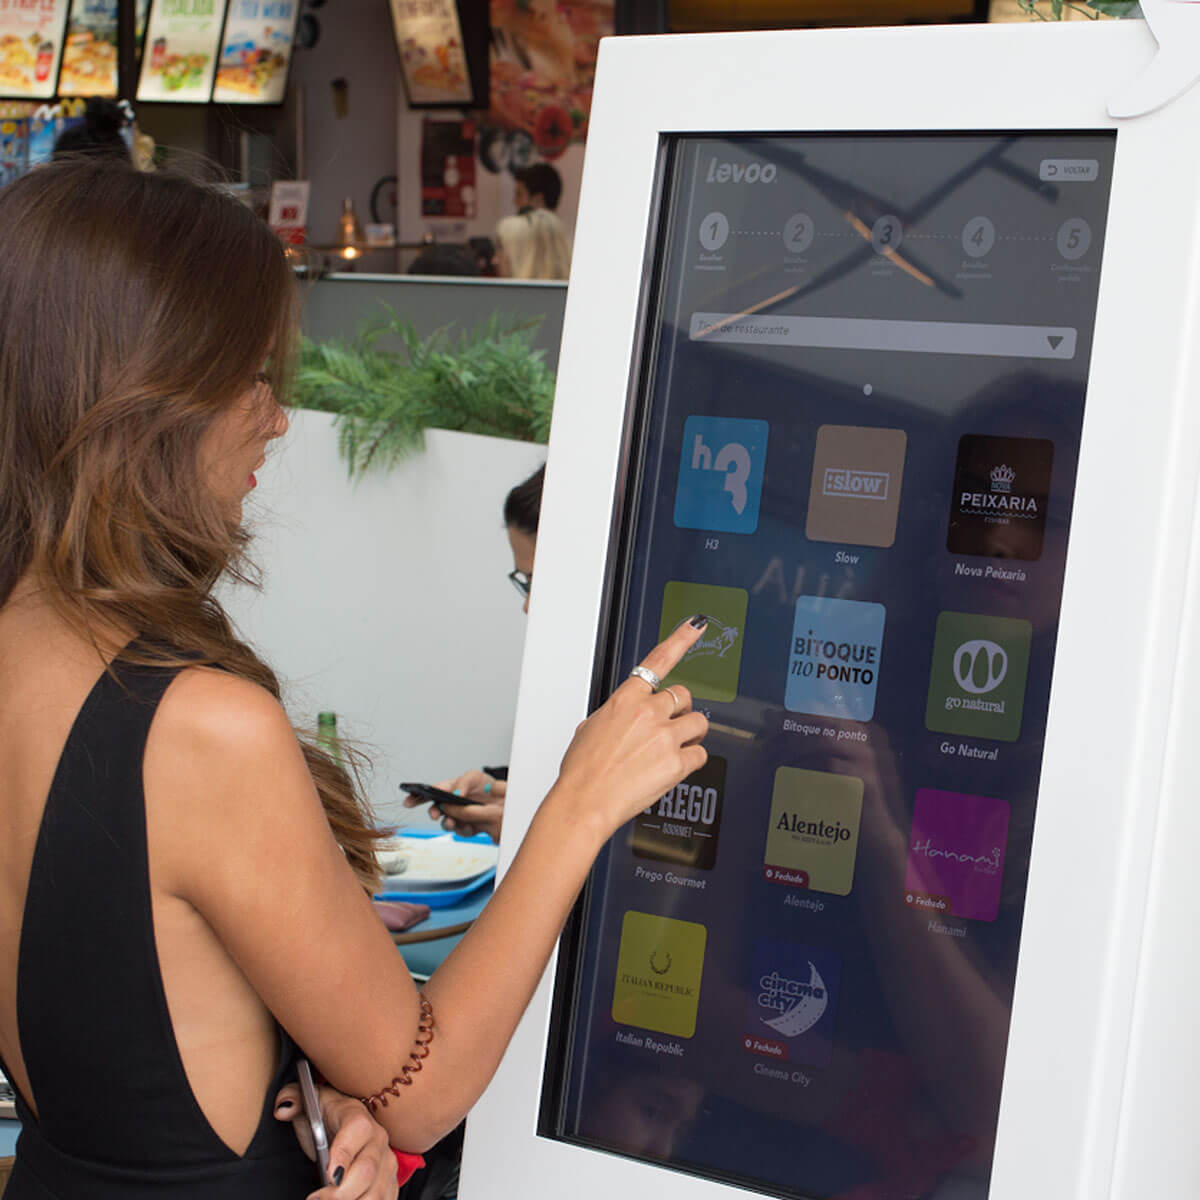 Self-Service Kiosks for Restaurants (QSR)